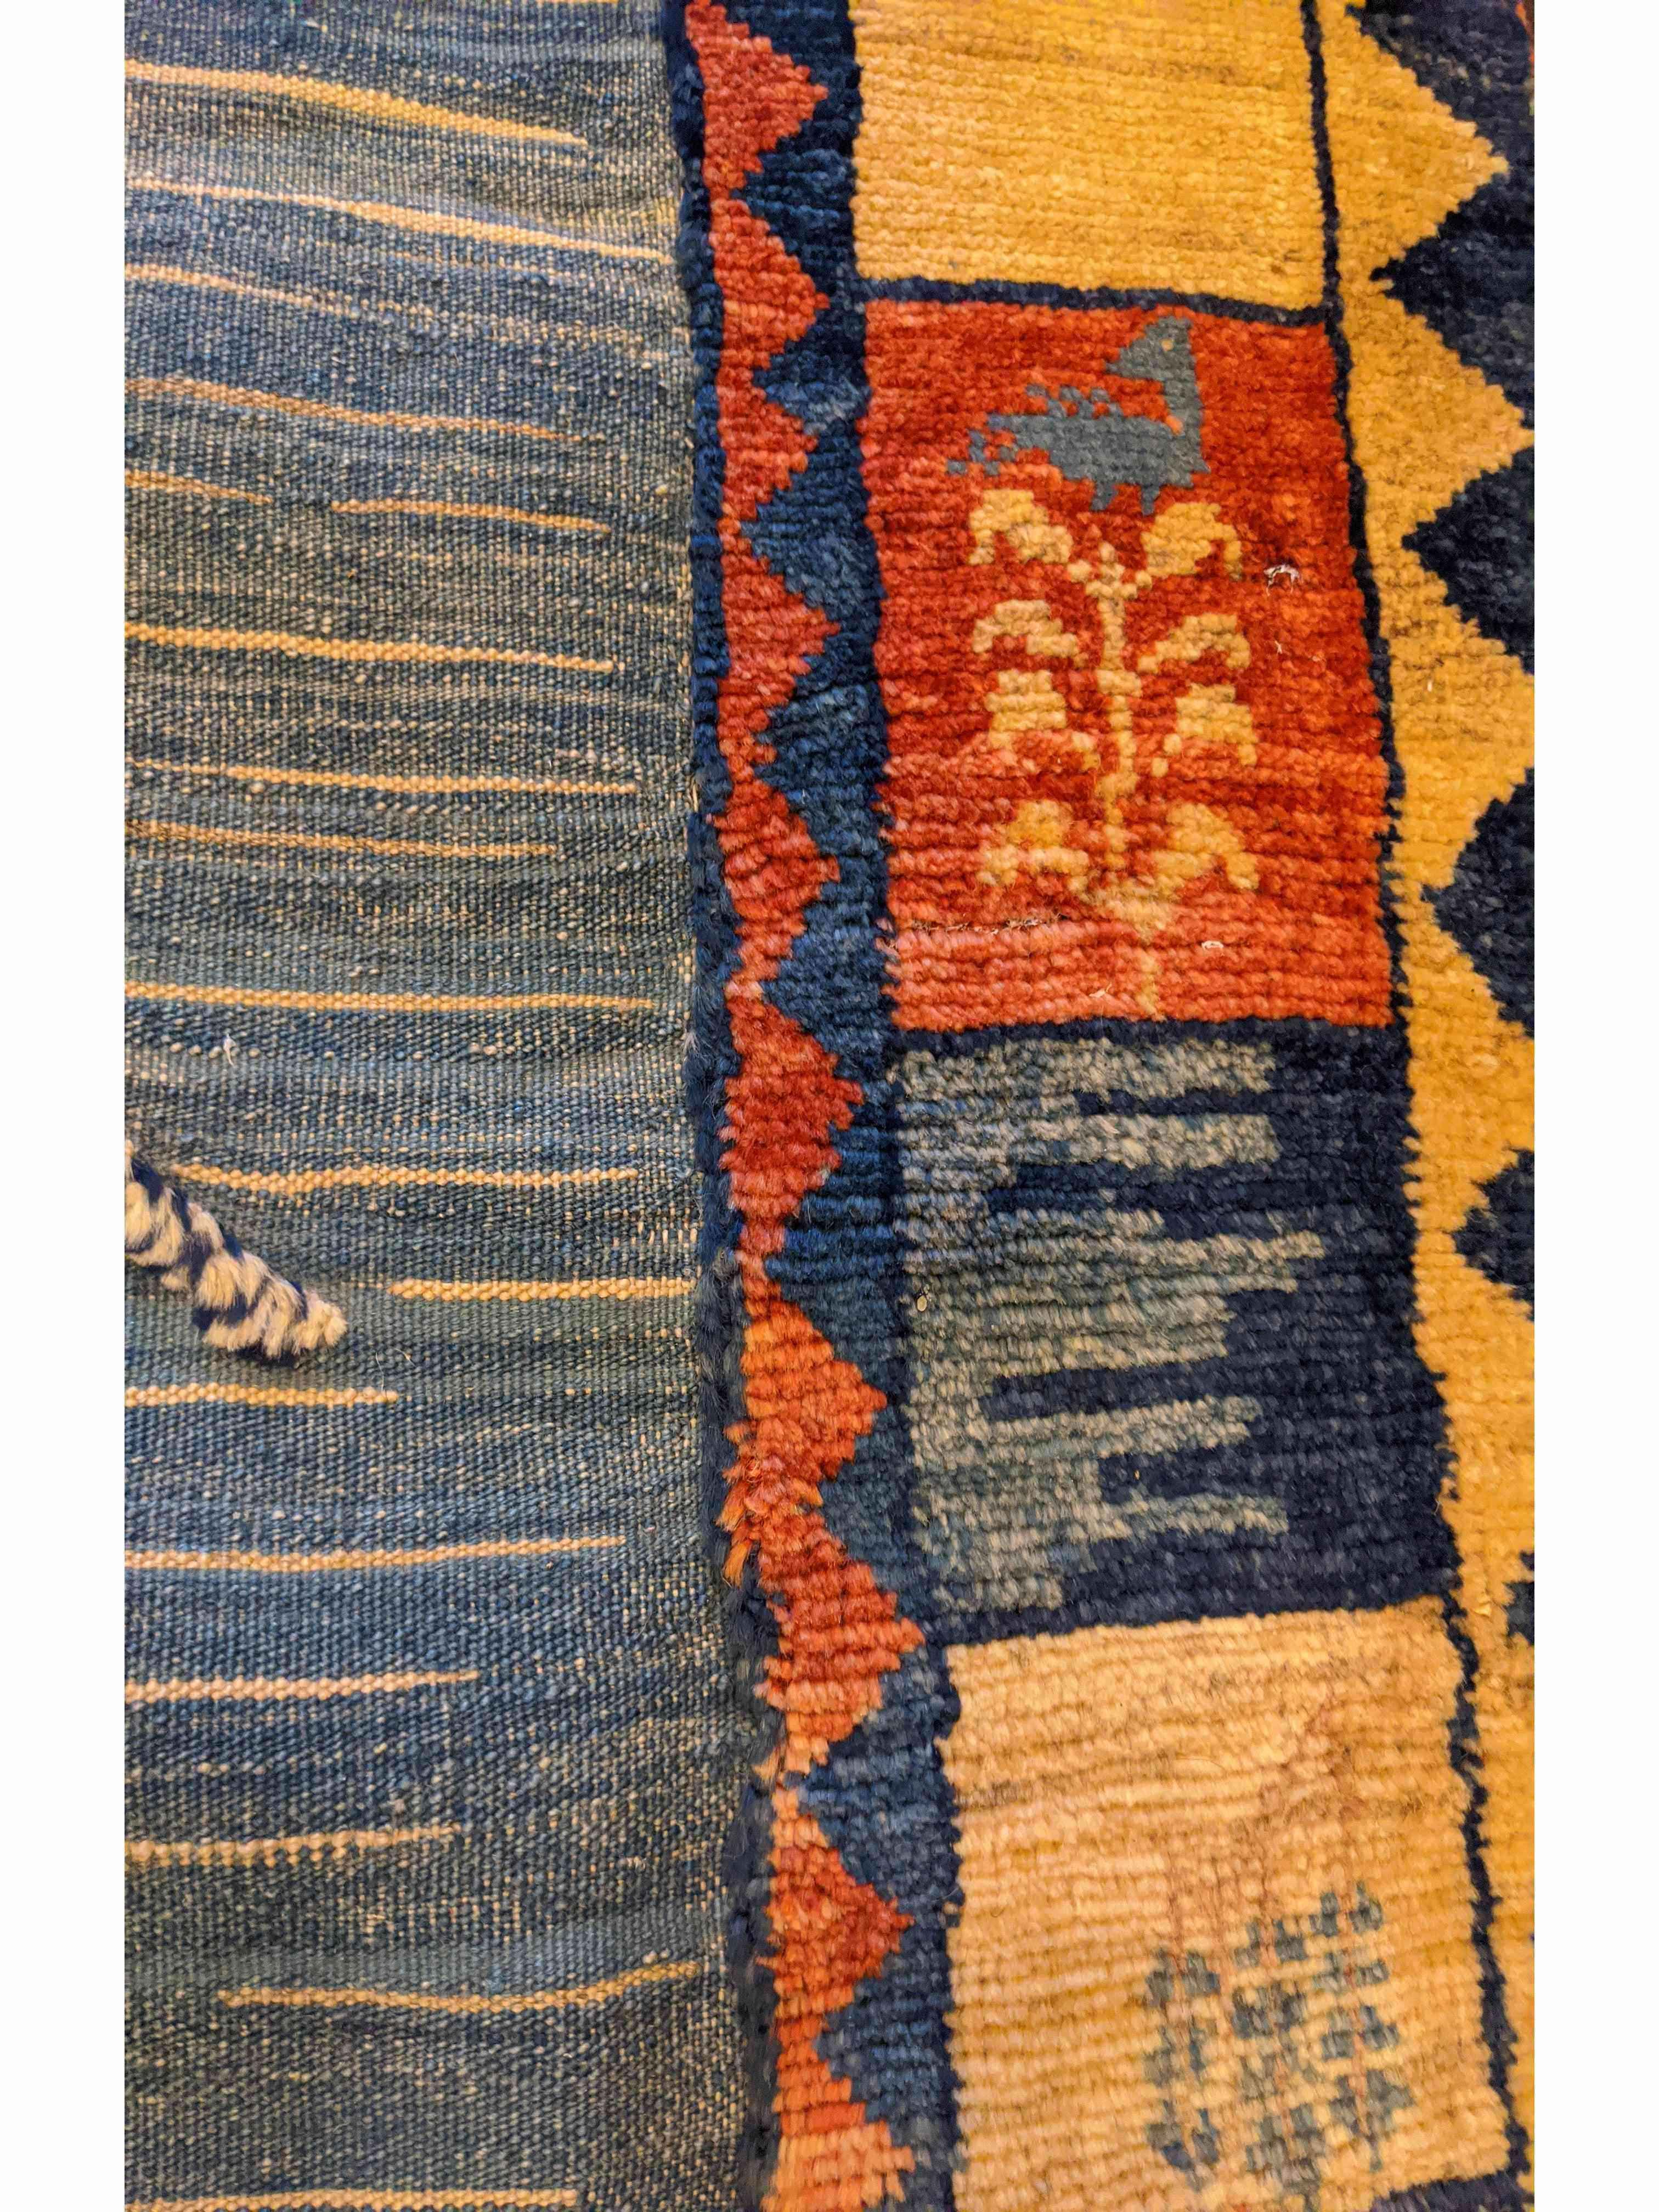 150 x 110 cm kilim Persian Gabbeh Tribal Multi coloured Rug - Rugmaster